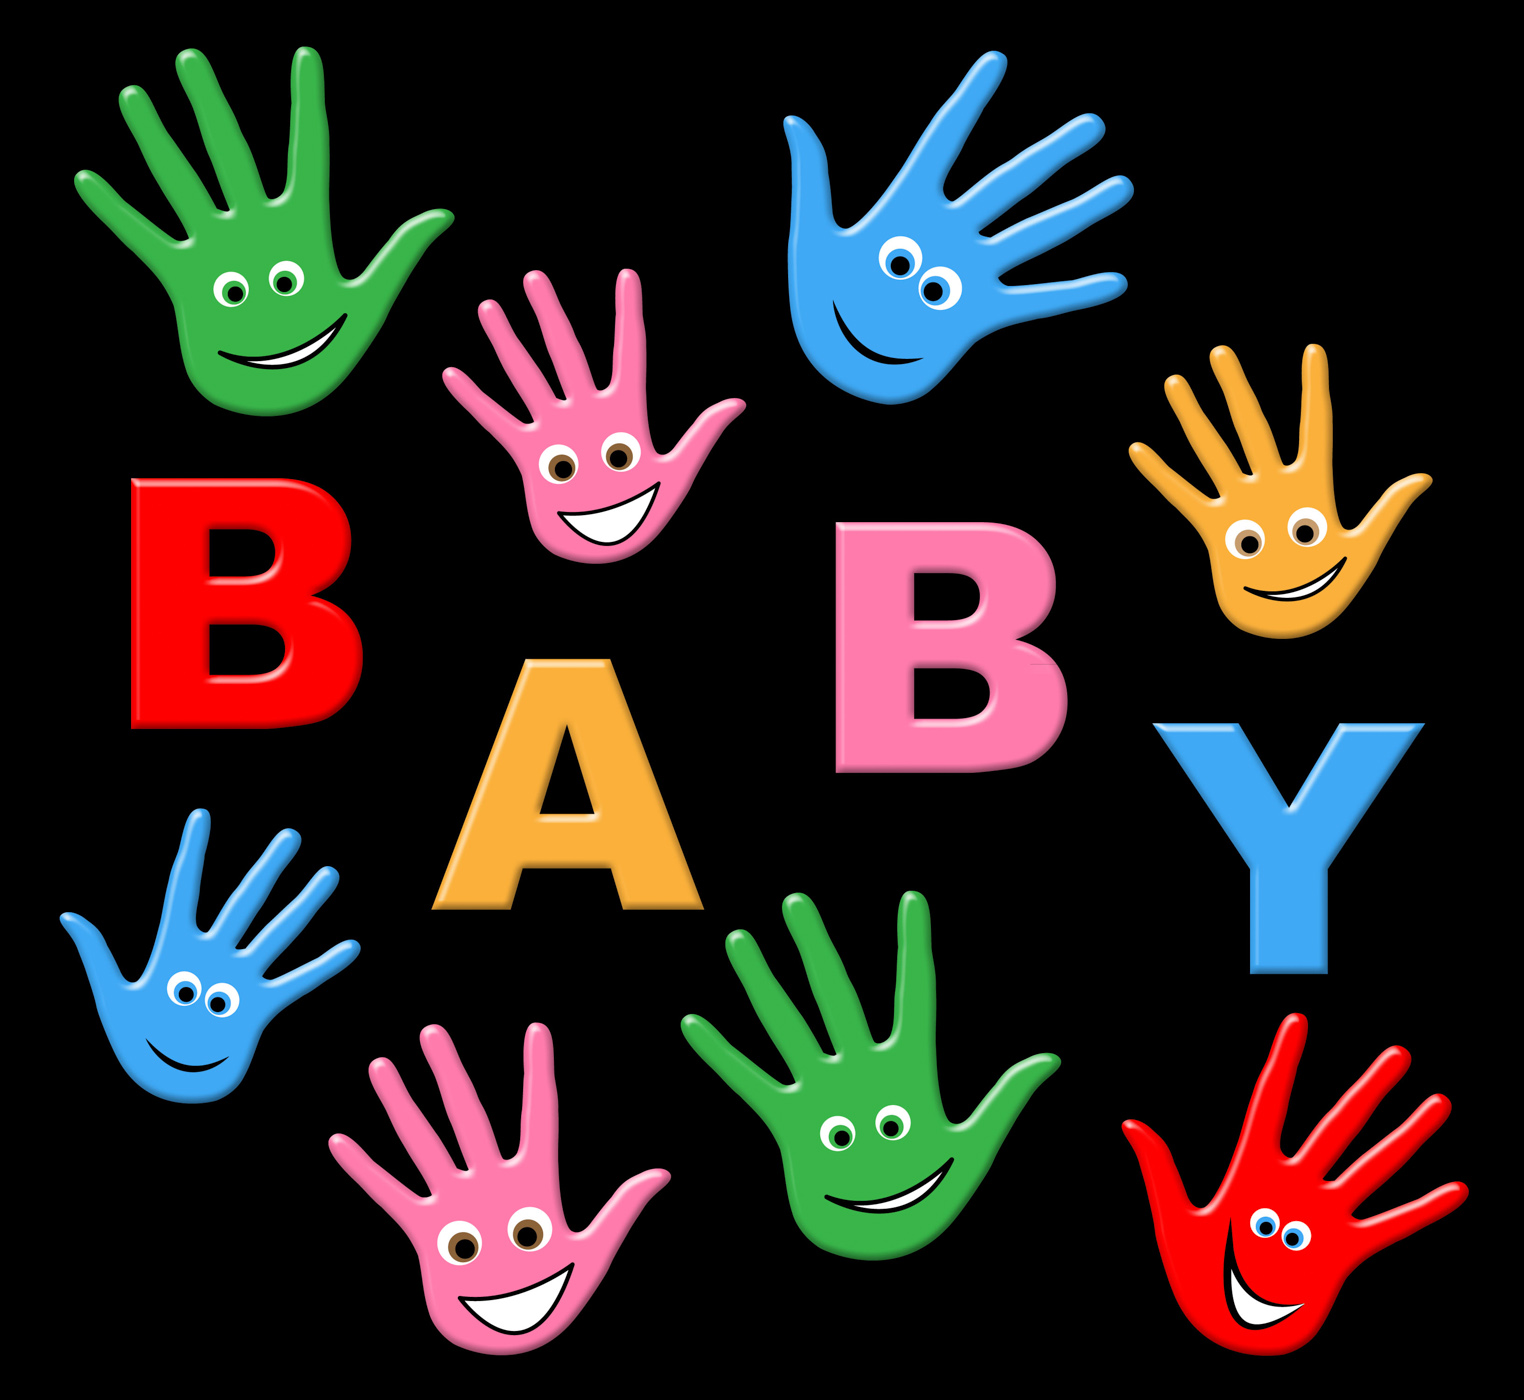 Baby hands represents parenthood newborn and parenting photo